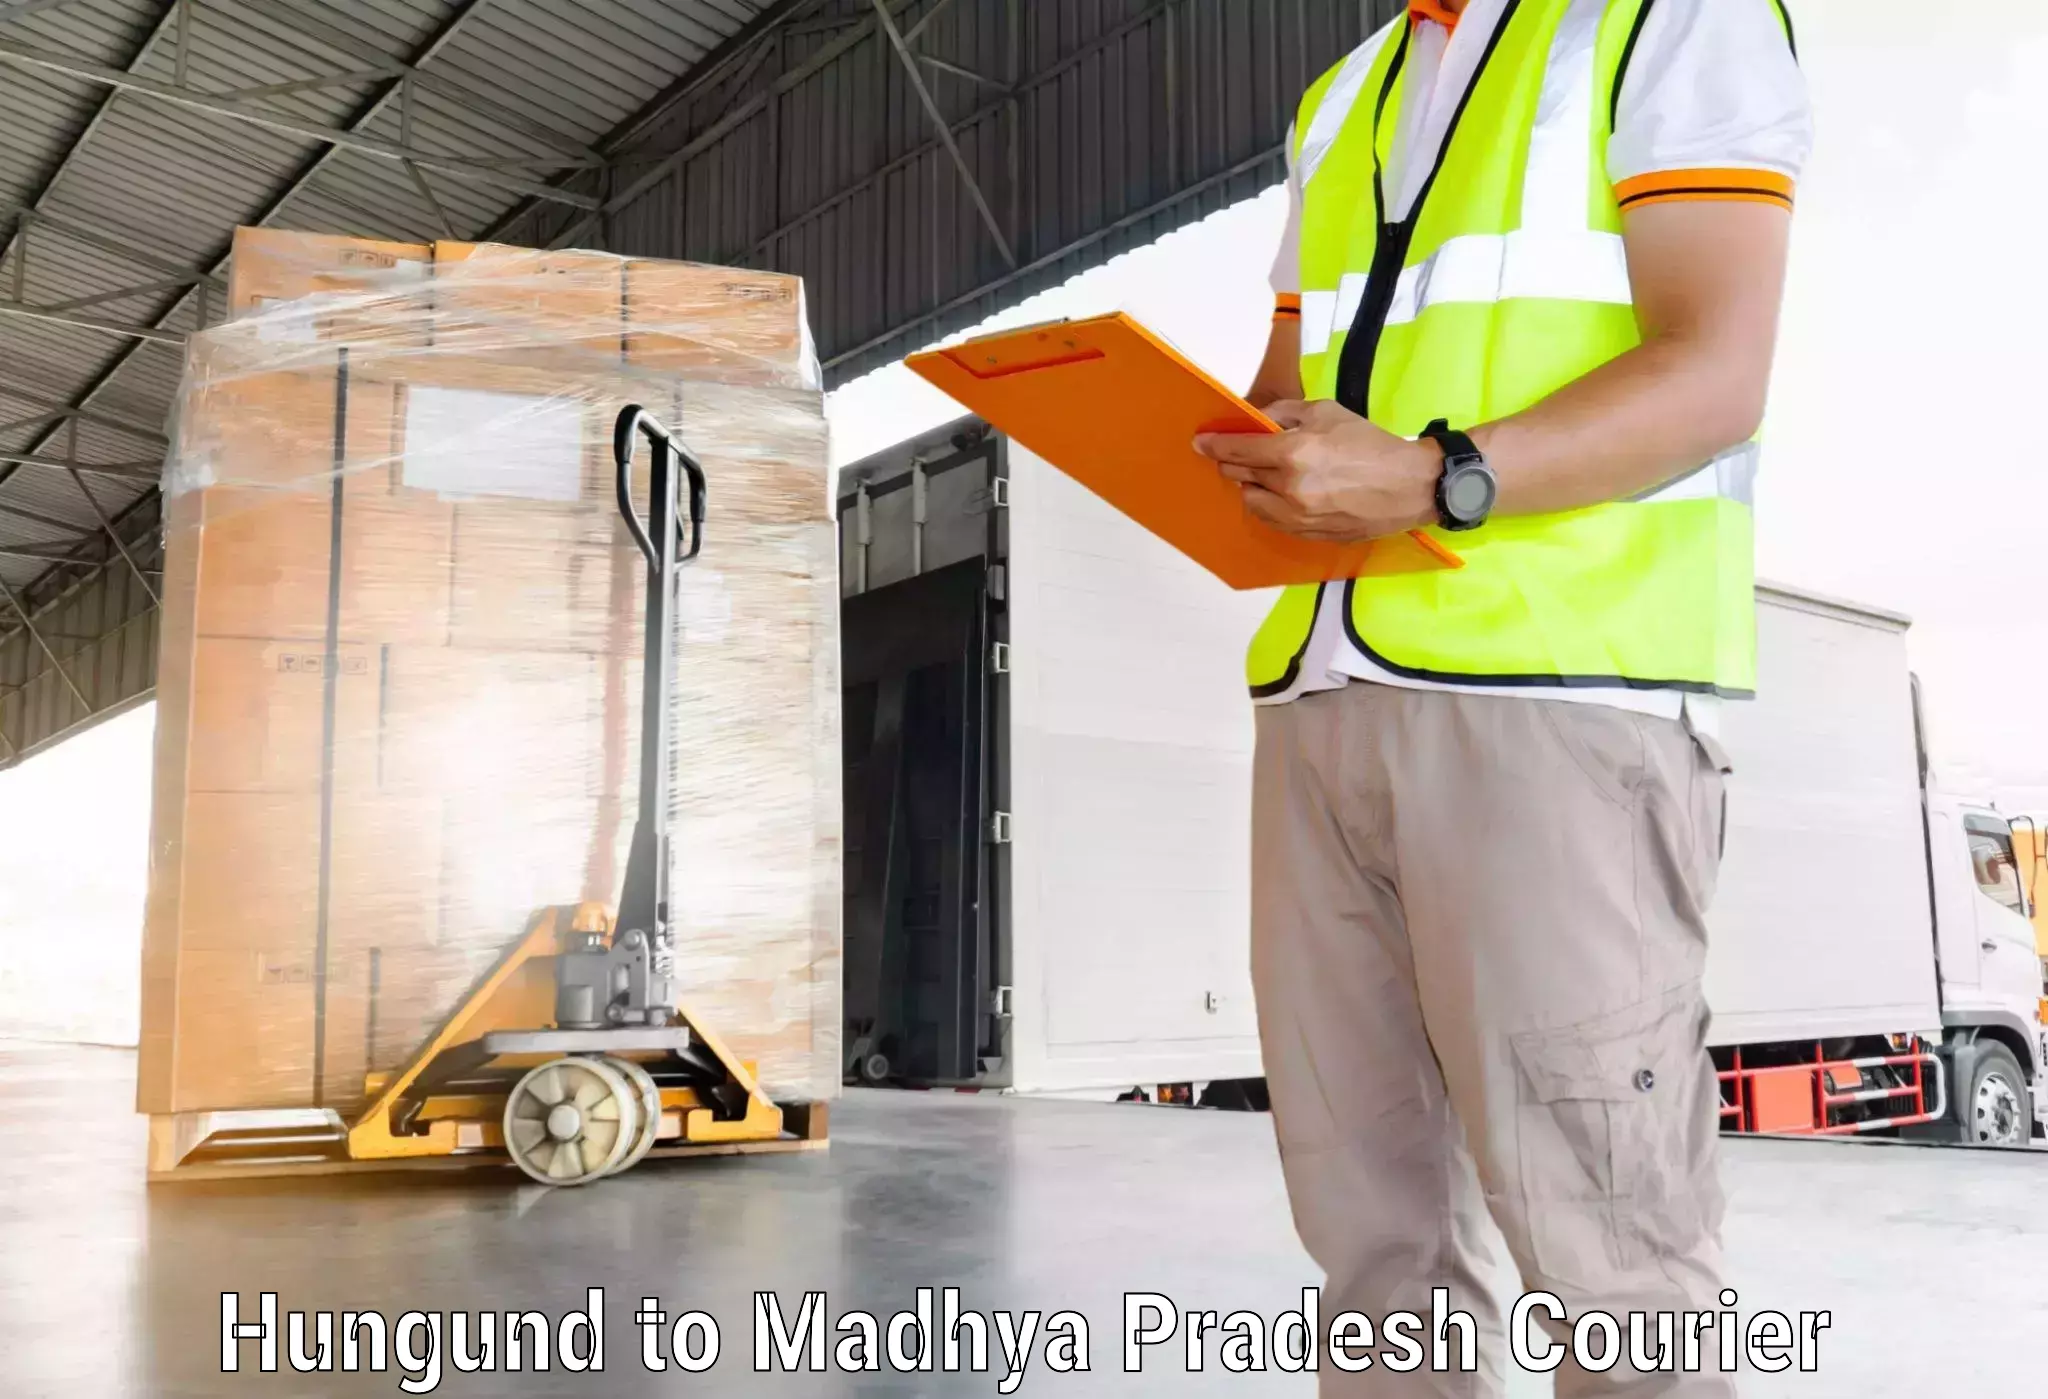 Courier service innovation Hungund to Shujalpur